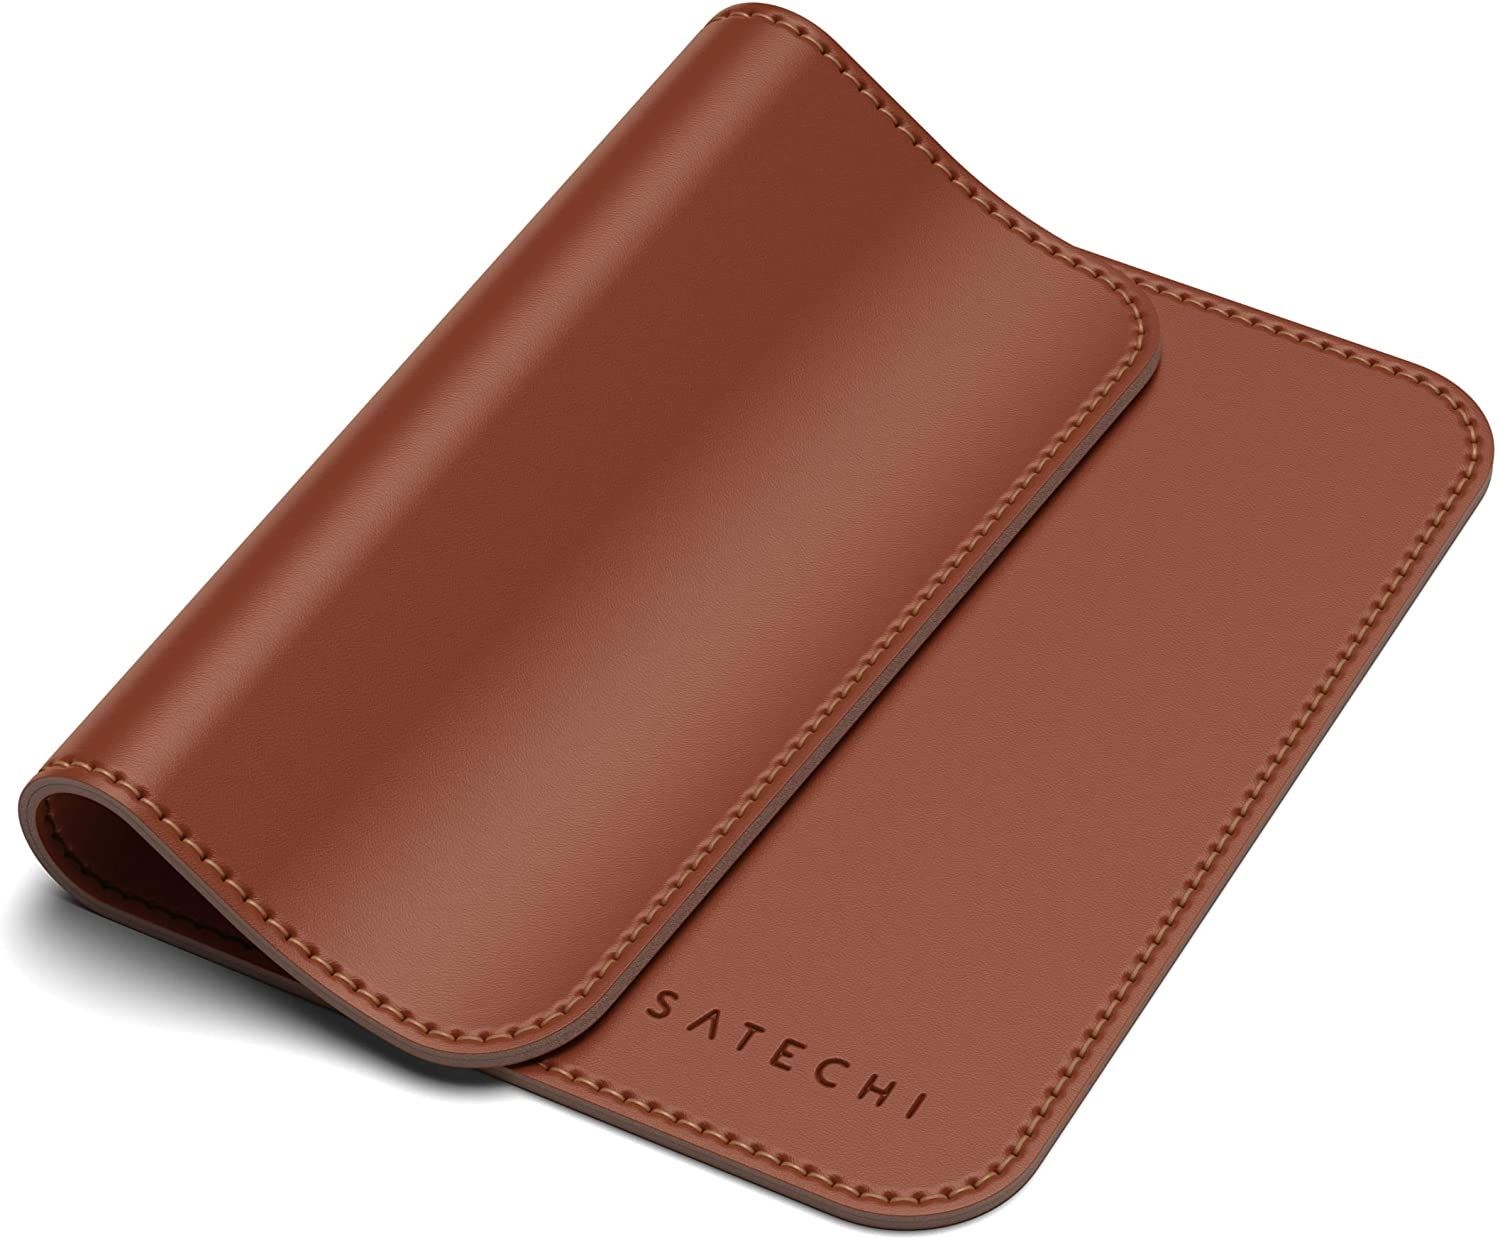 satechi-exo-leather-mousepad-brown-2.jpg